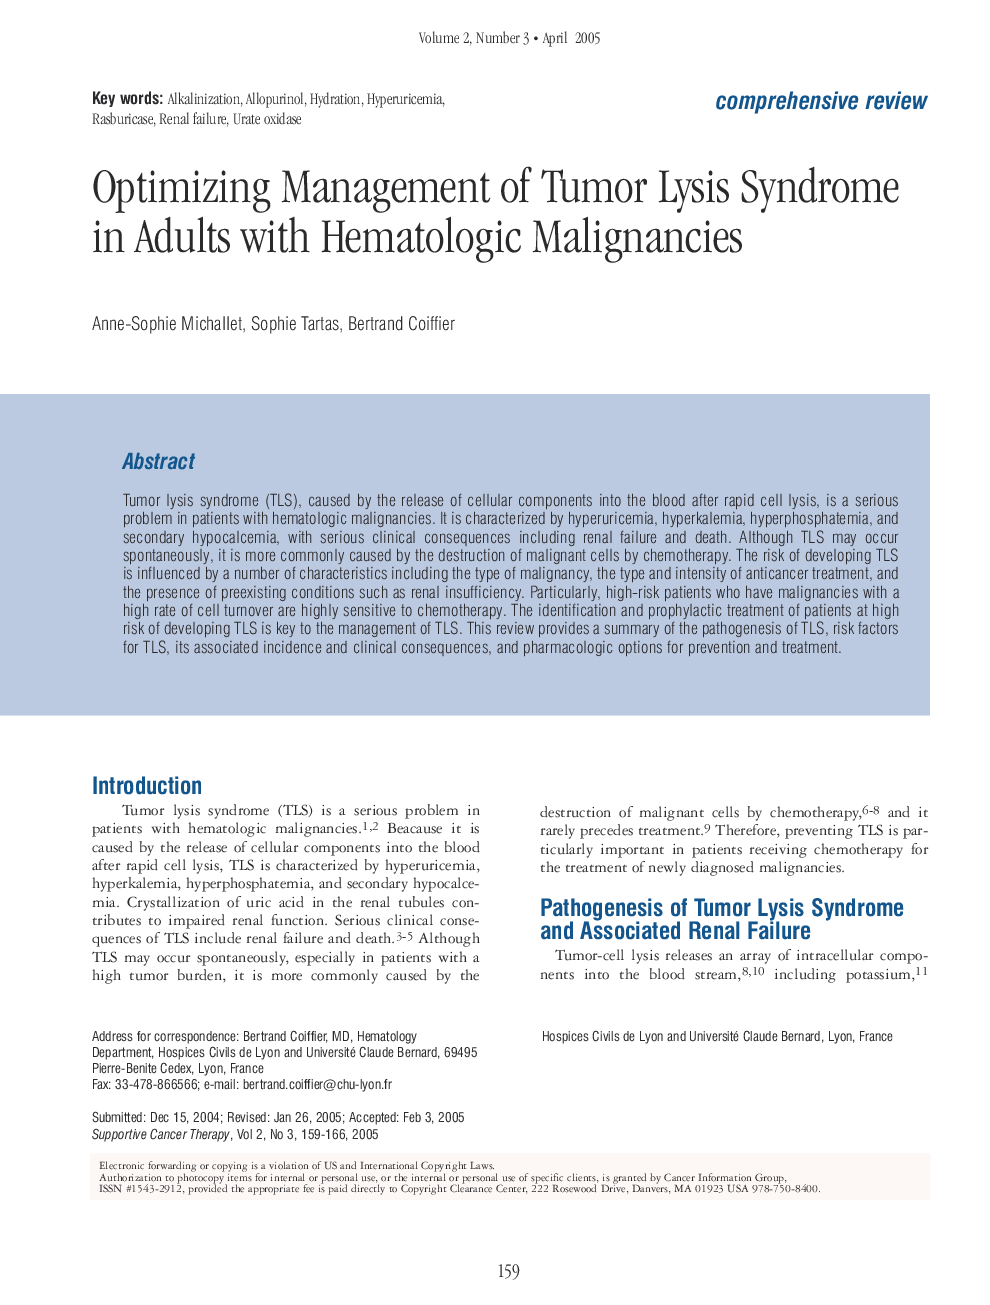 Optimizing Management of Tumor Lysis Syndrome in Adults with Hematologic Malignancies